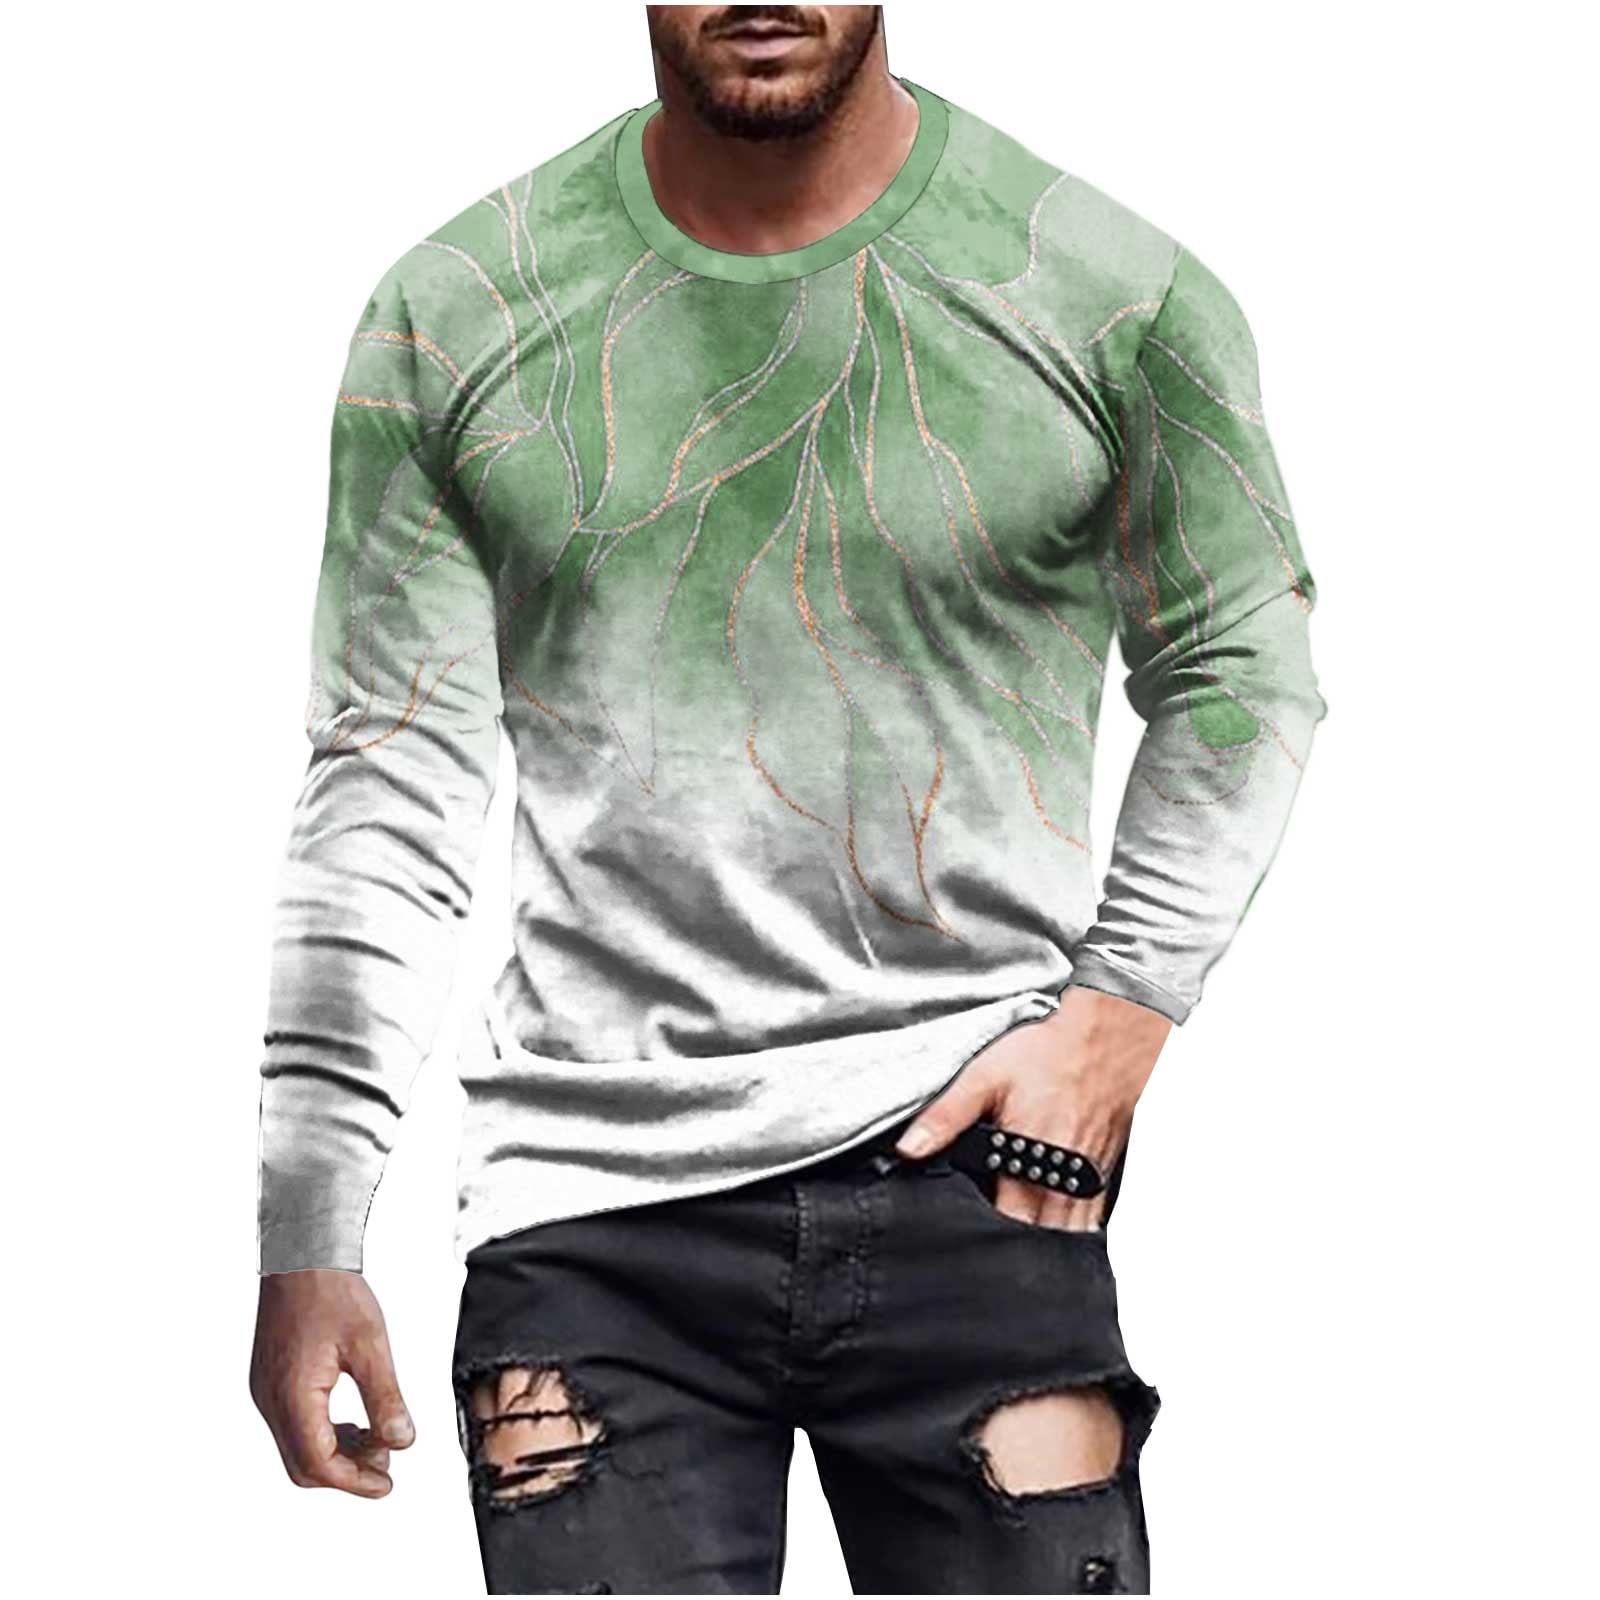 Elainilye Fashion Shirts For Men Graphic Prints Casual Round Neck